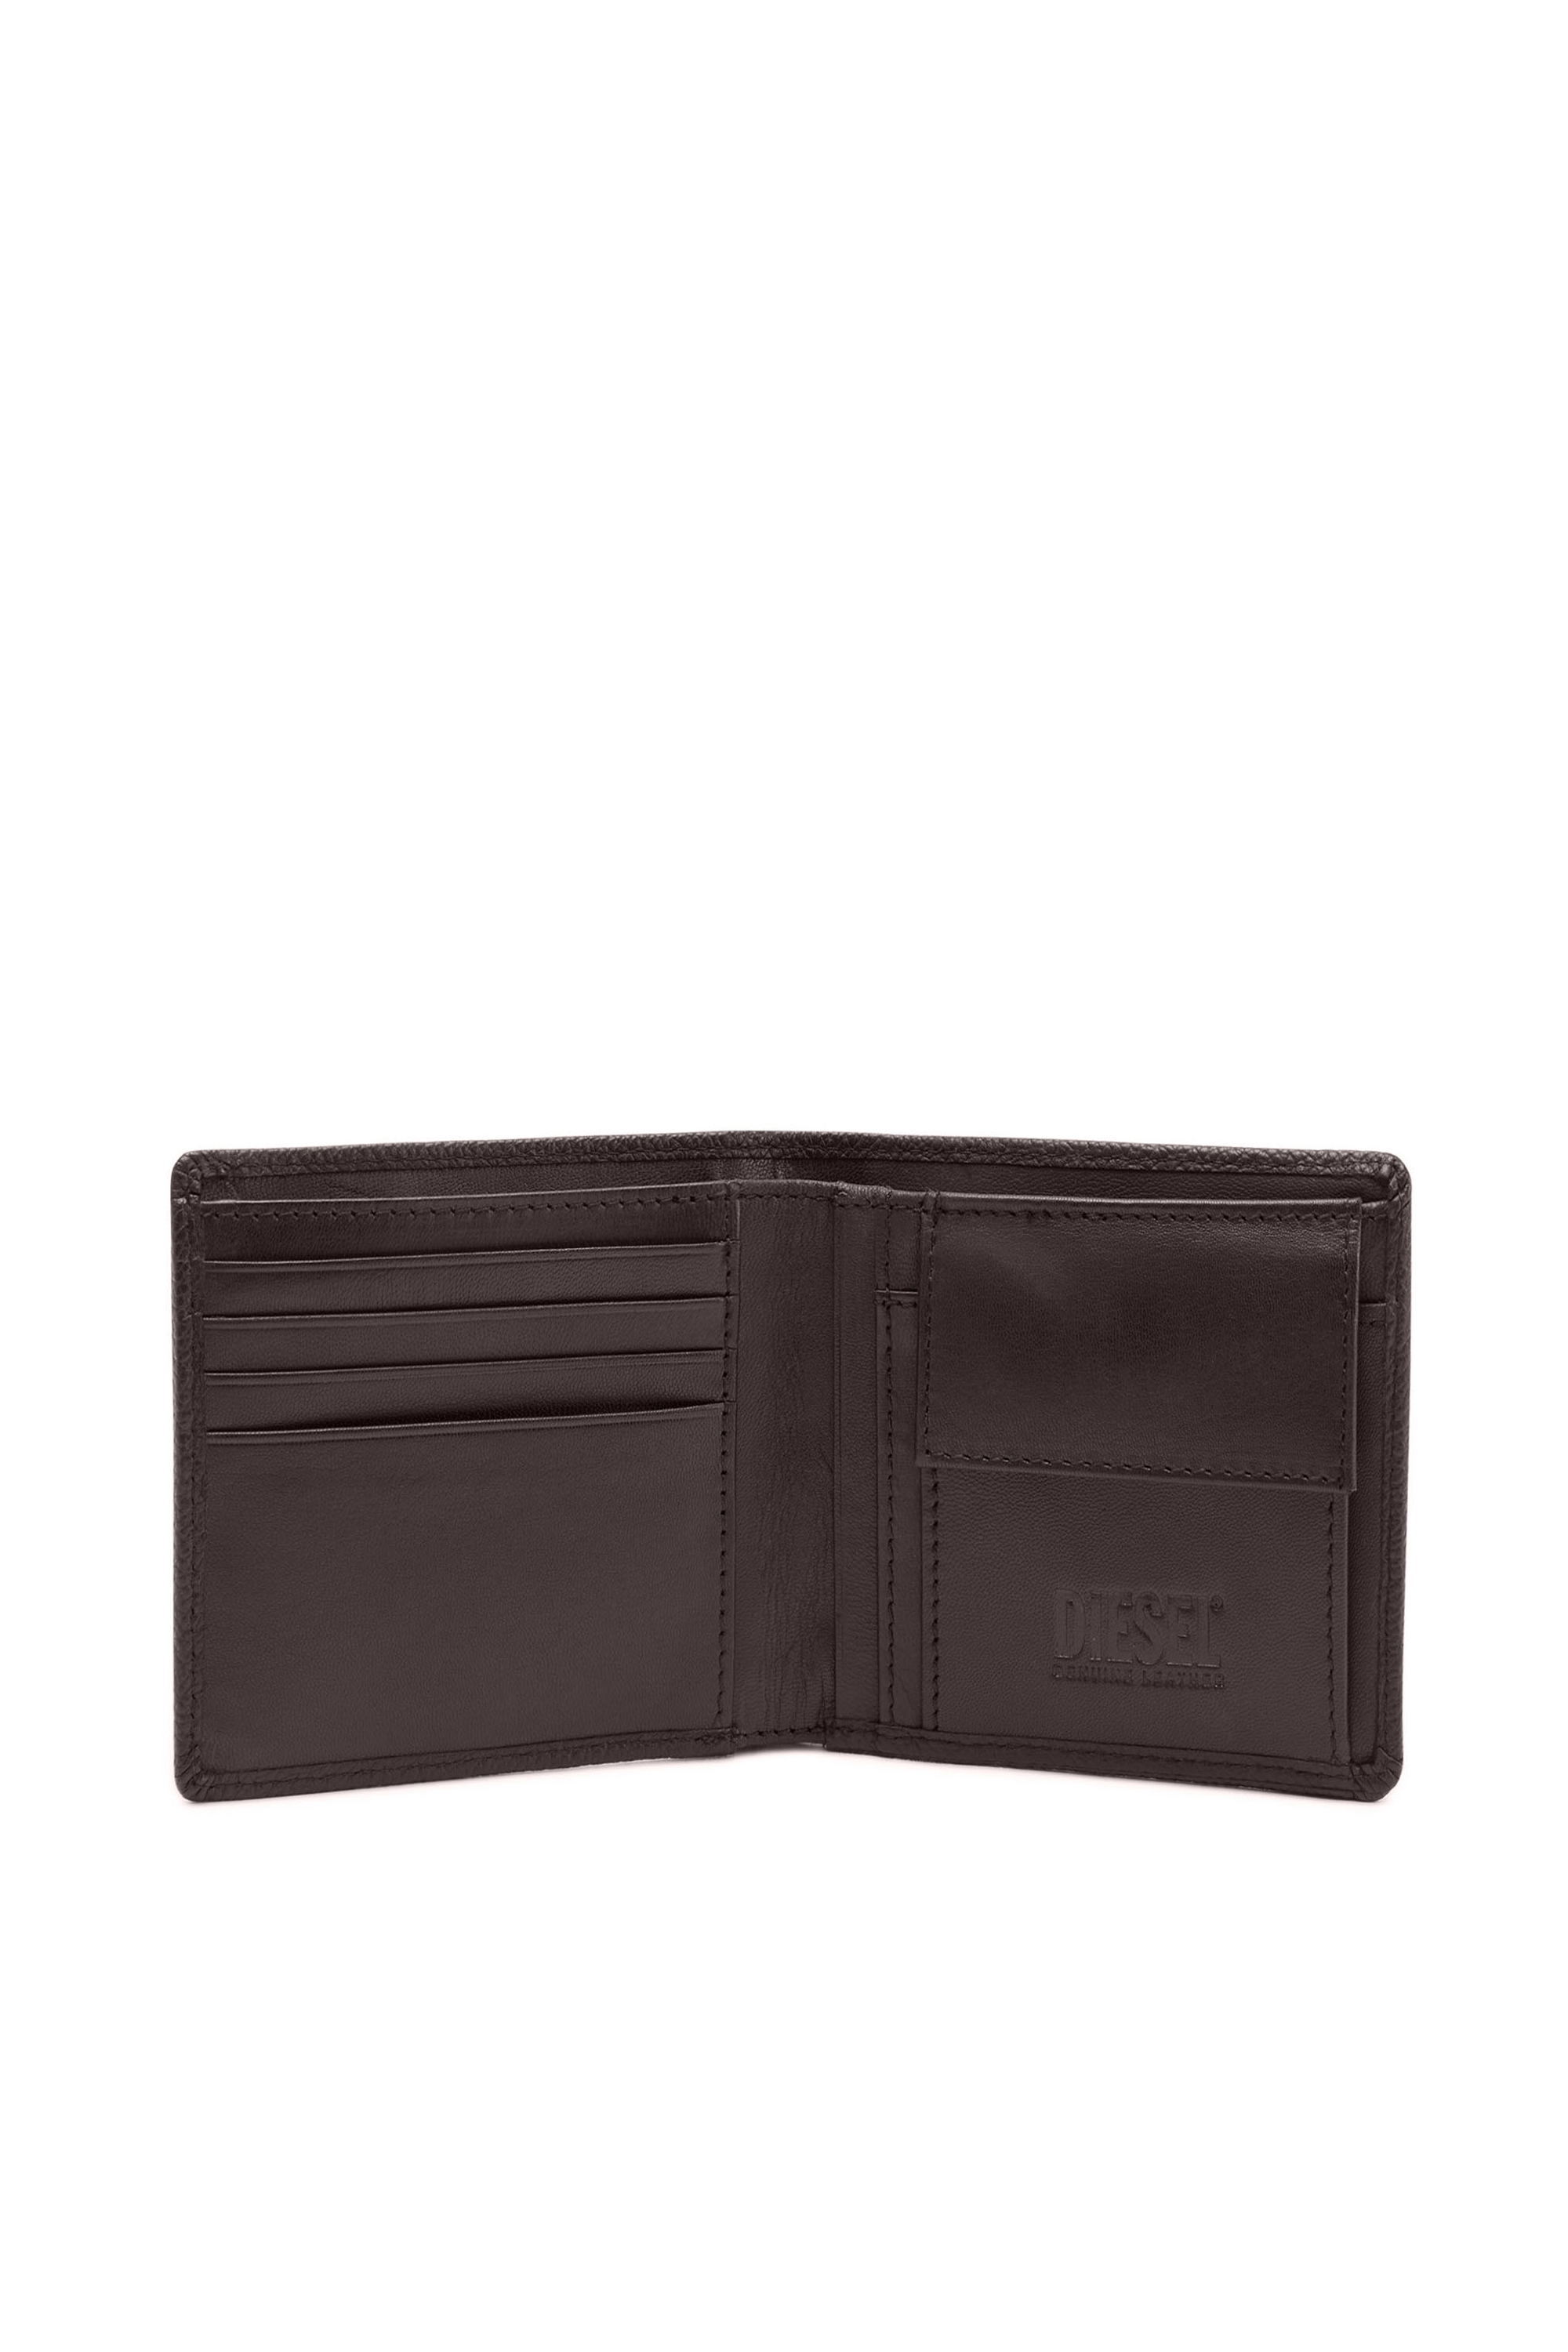 Diesel - BI FOLD COIN S, Man Bi-fold wallet in grainy leather in Brown - Image 3